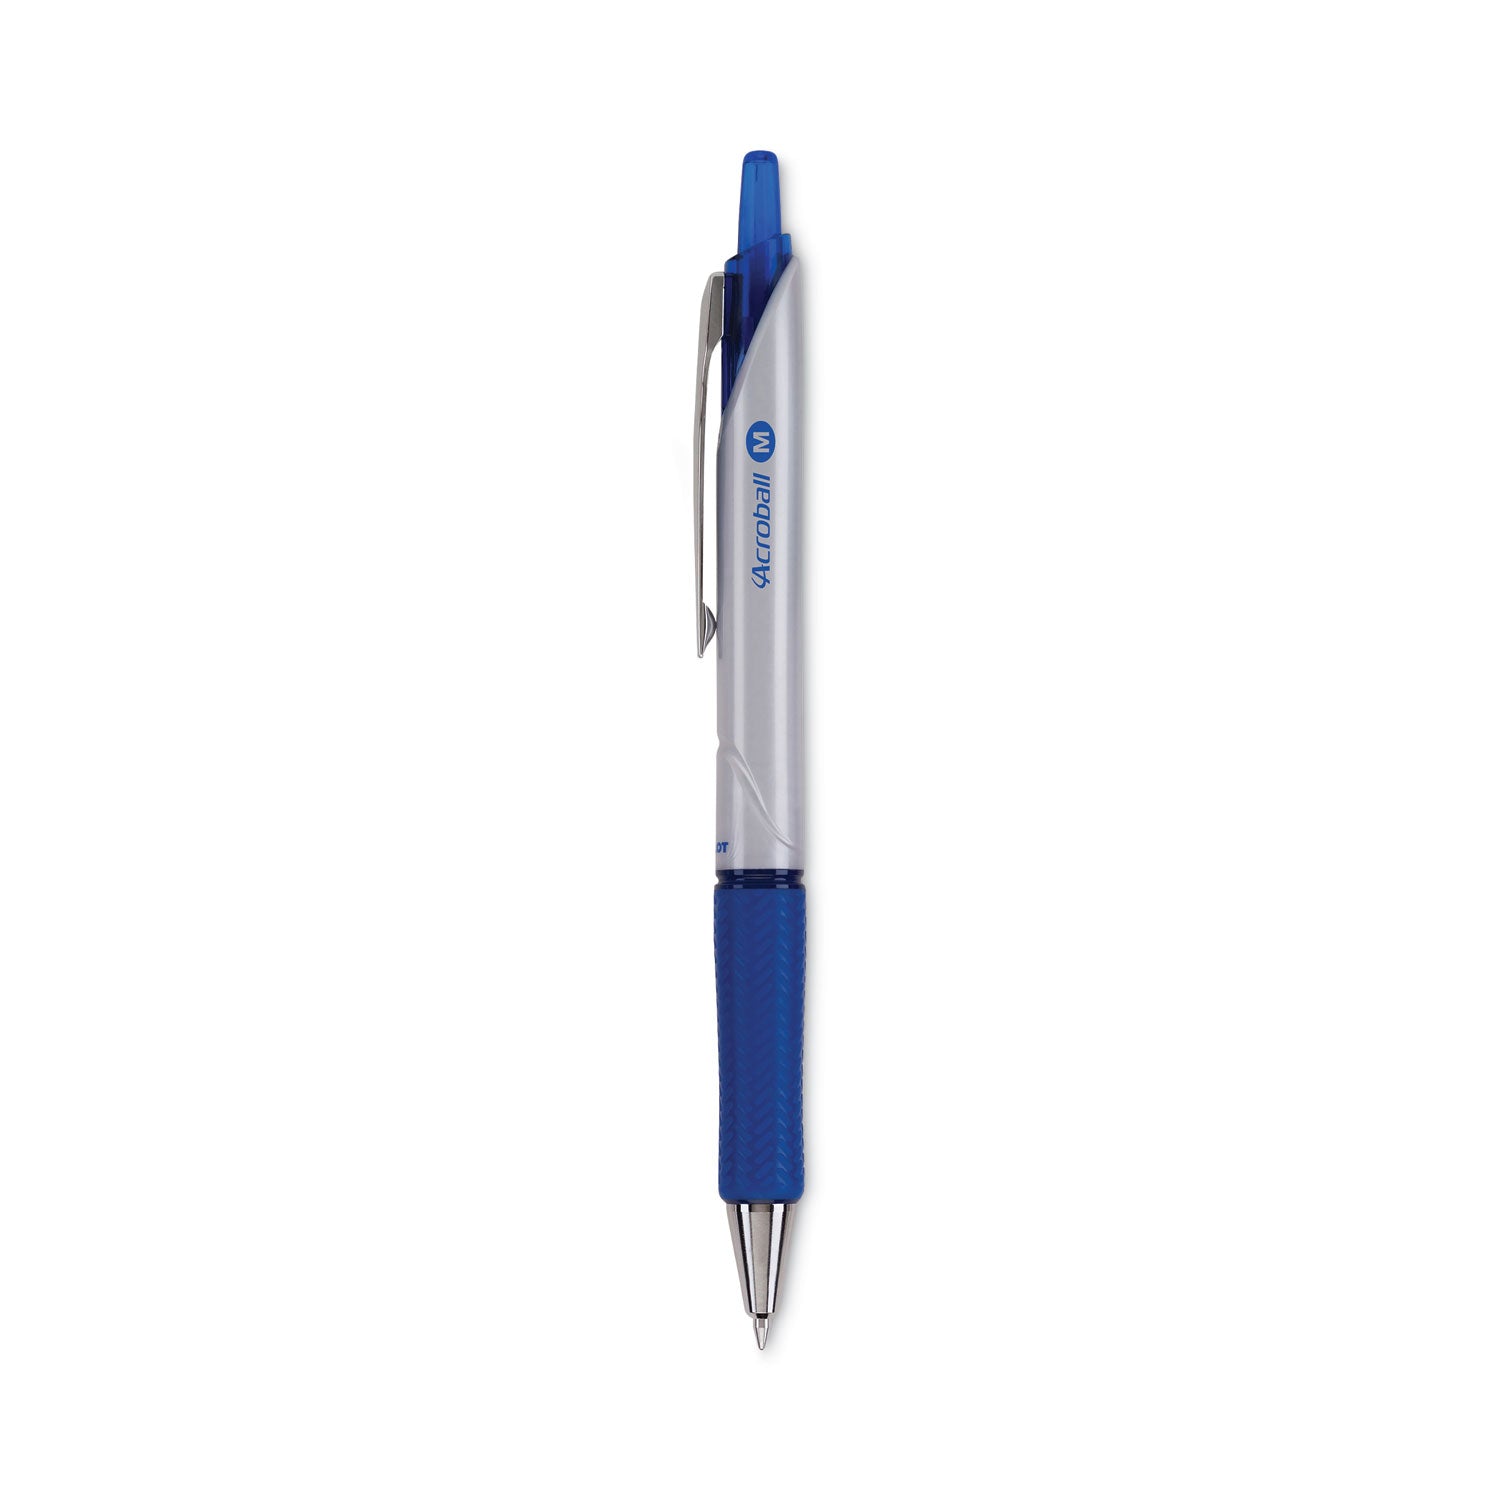 Acroball Pro Advanced Ink Hybrid Gel Pen, Retractable, Medium 1 mm, Blue Ink, Silver/Blue Barrel, Dozen - 